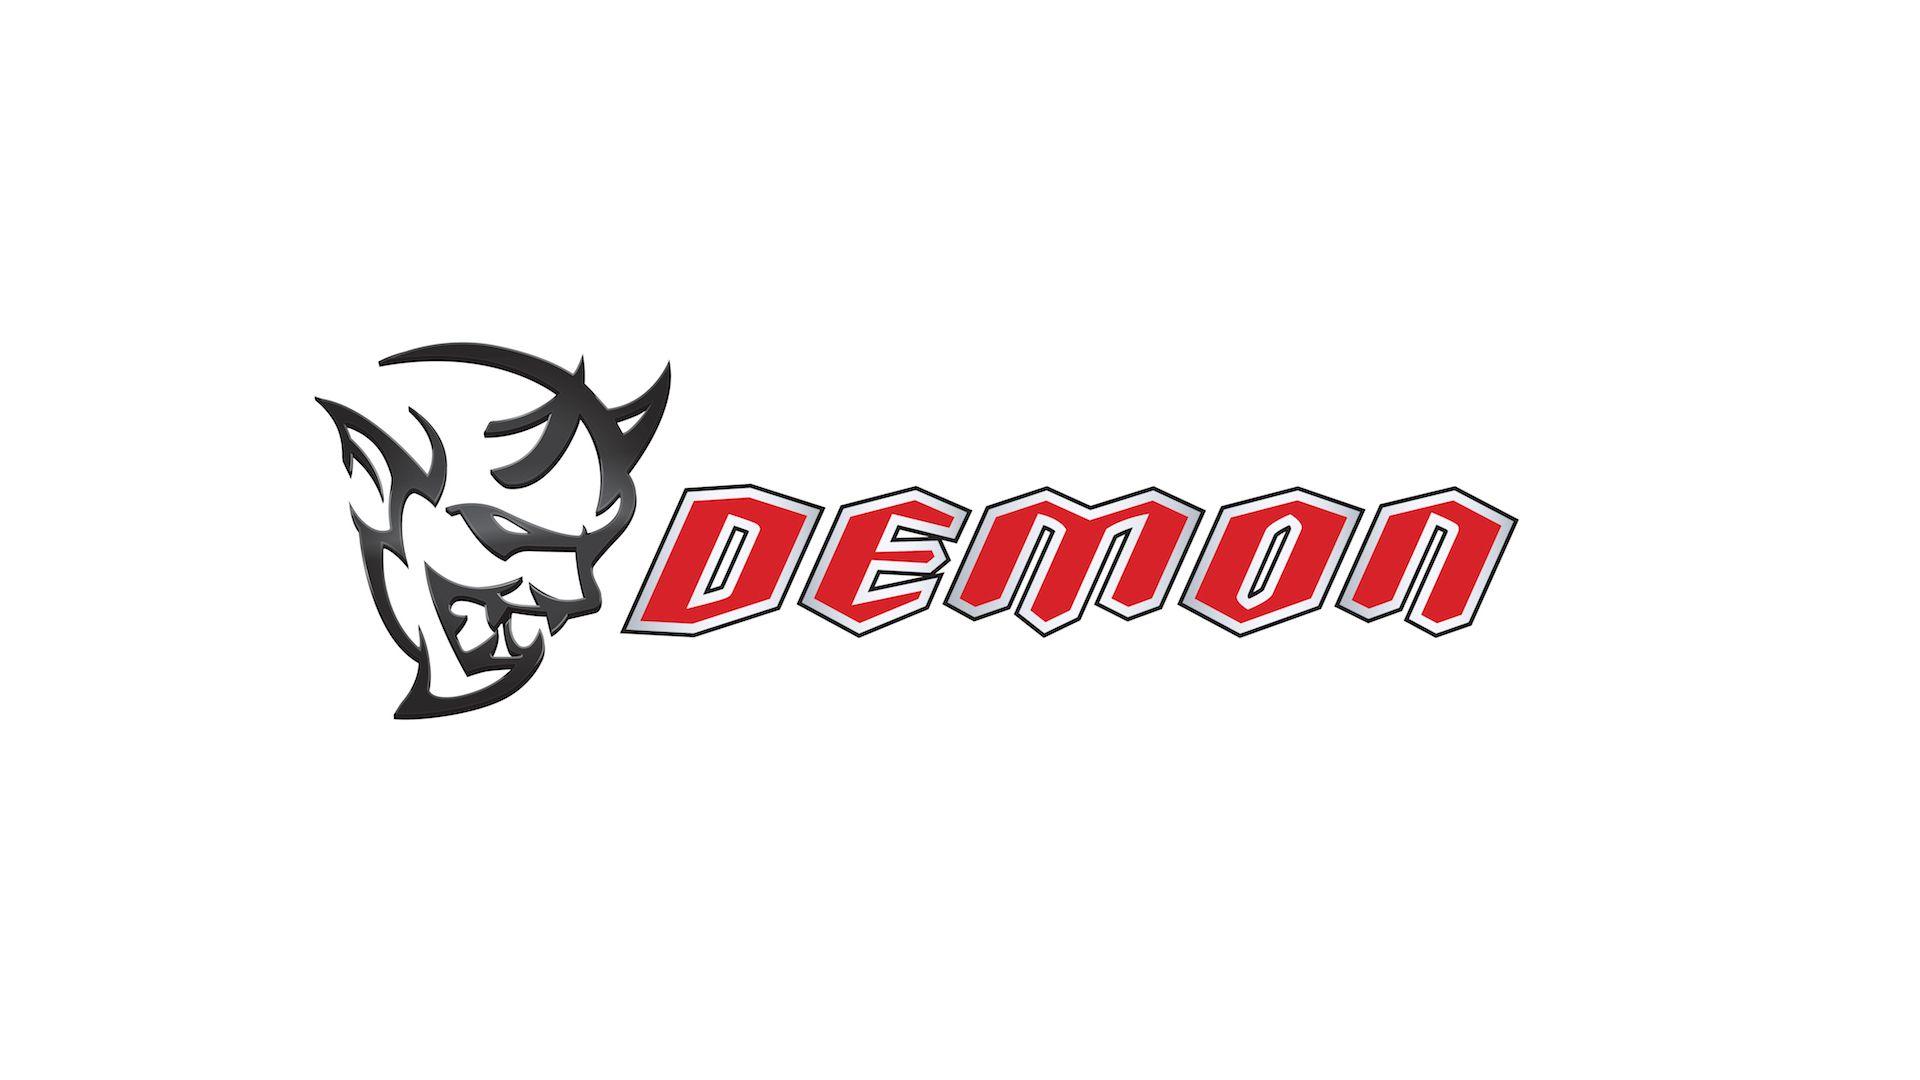 Dodge Challenger Logo - The 2018 Dodge Challenger SRT Demon will be a meaner Hellcat halo car